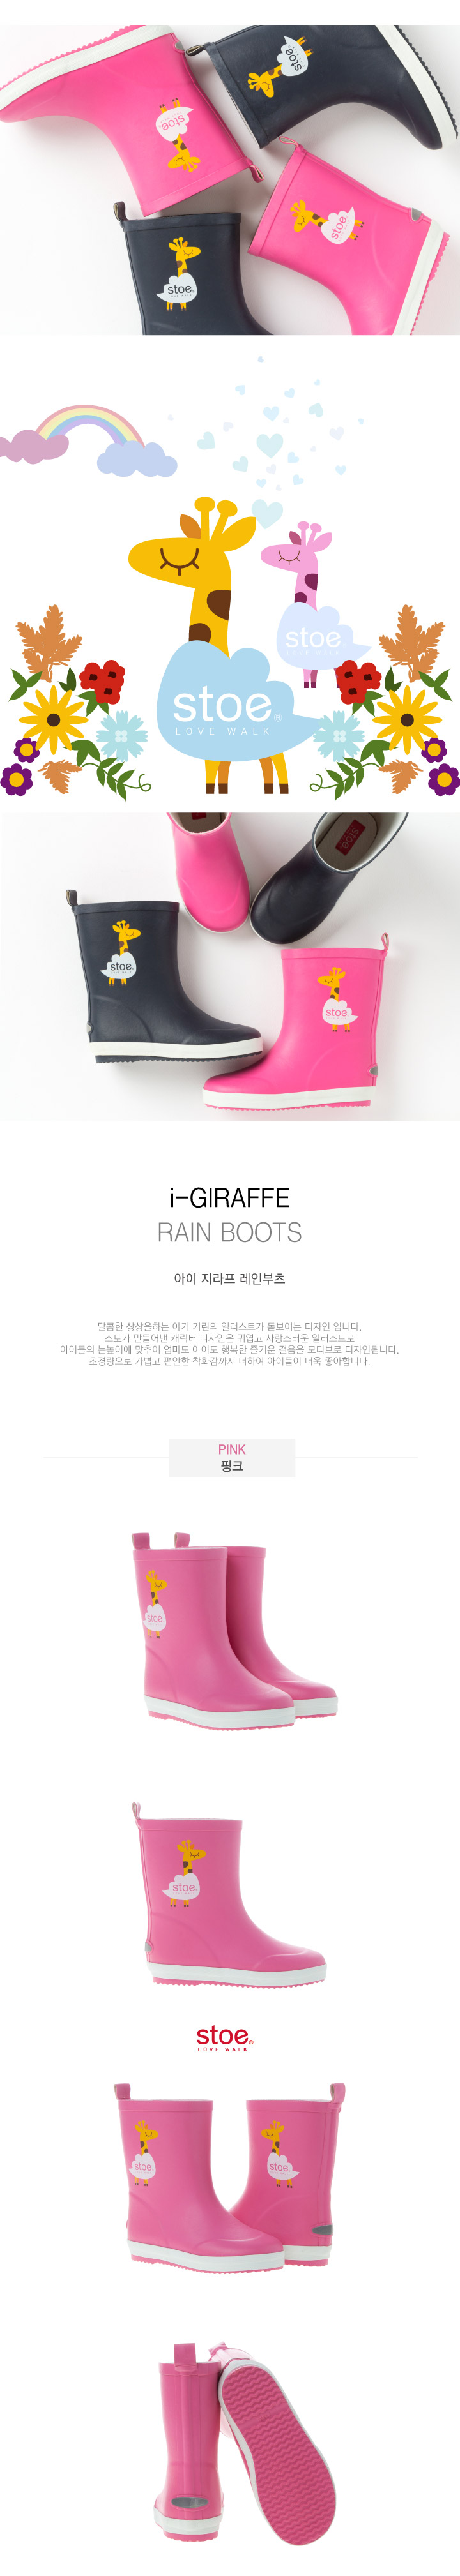 i-giraffe_rainboots_pink_01_142150.jpg